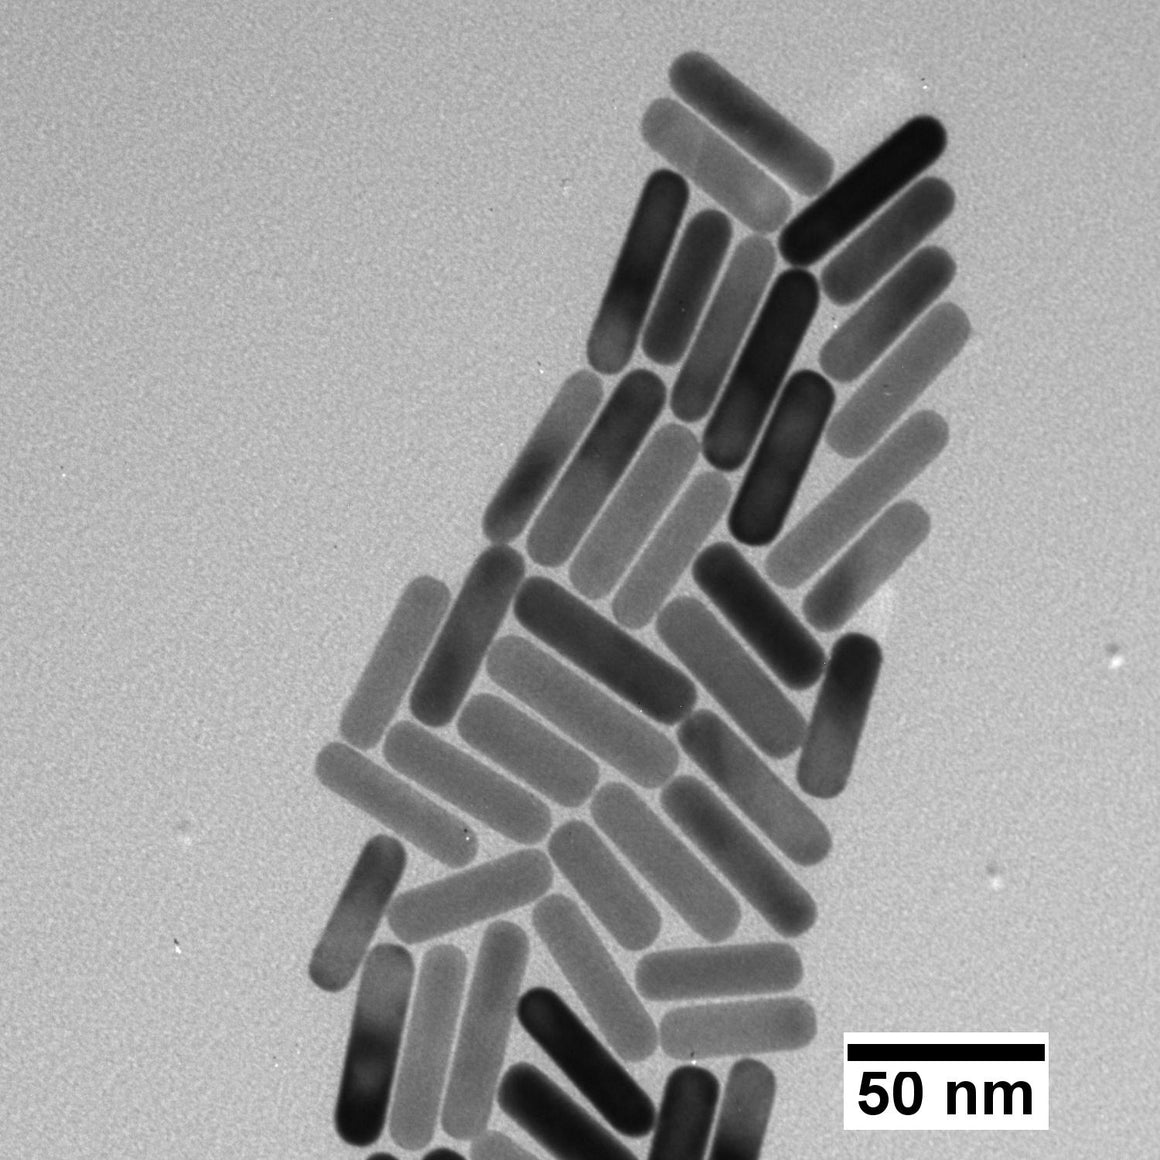 NanoXact Gold Nanorods – Bare (Citrate)